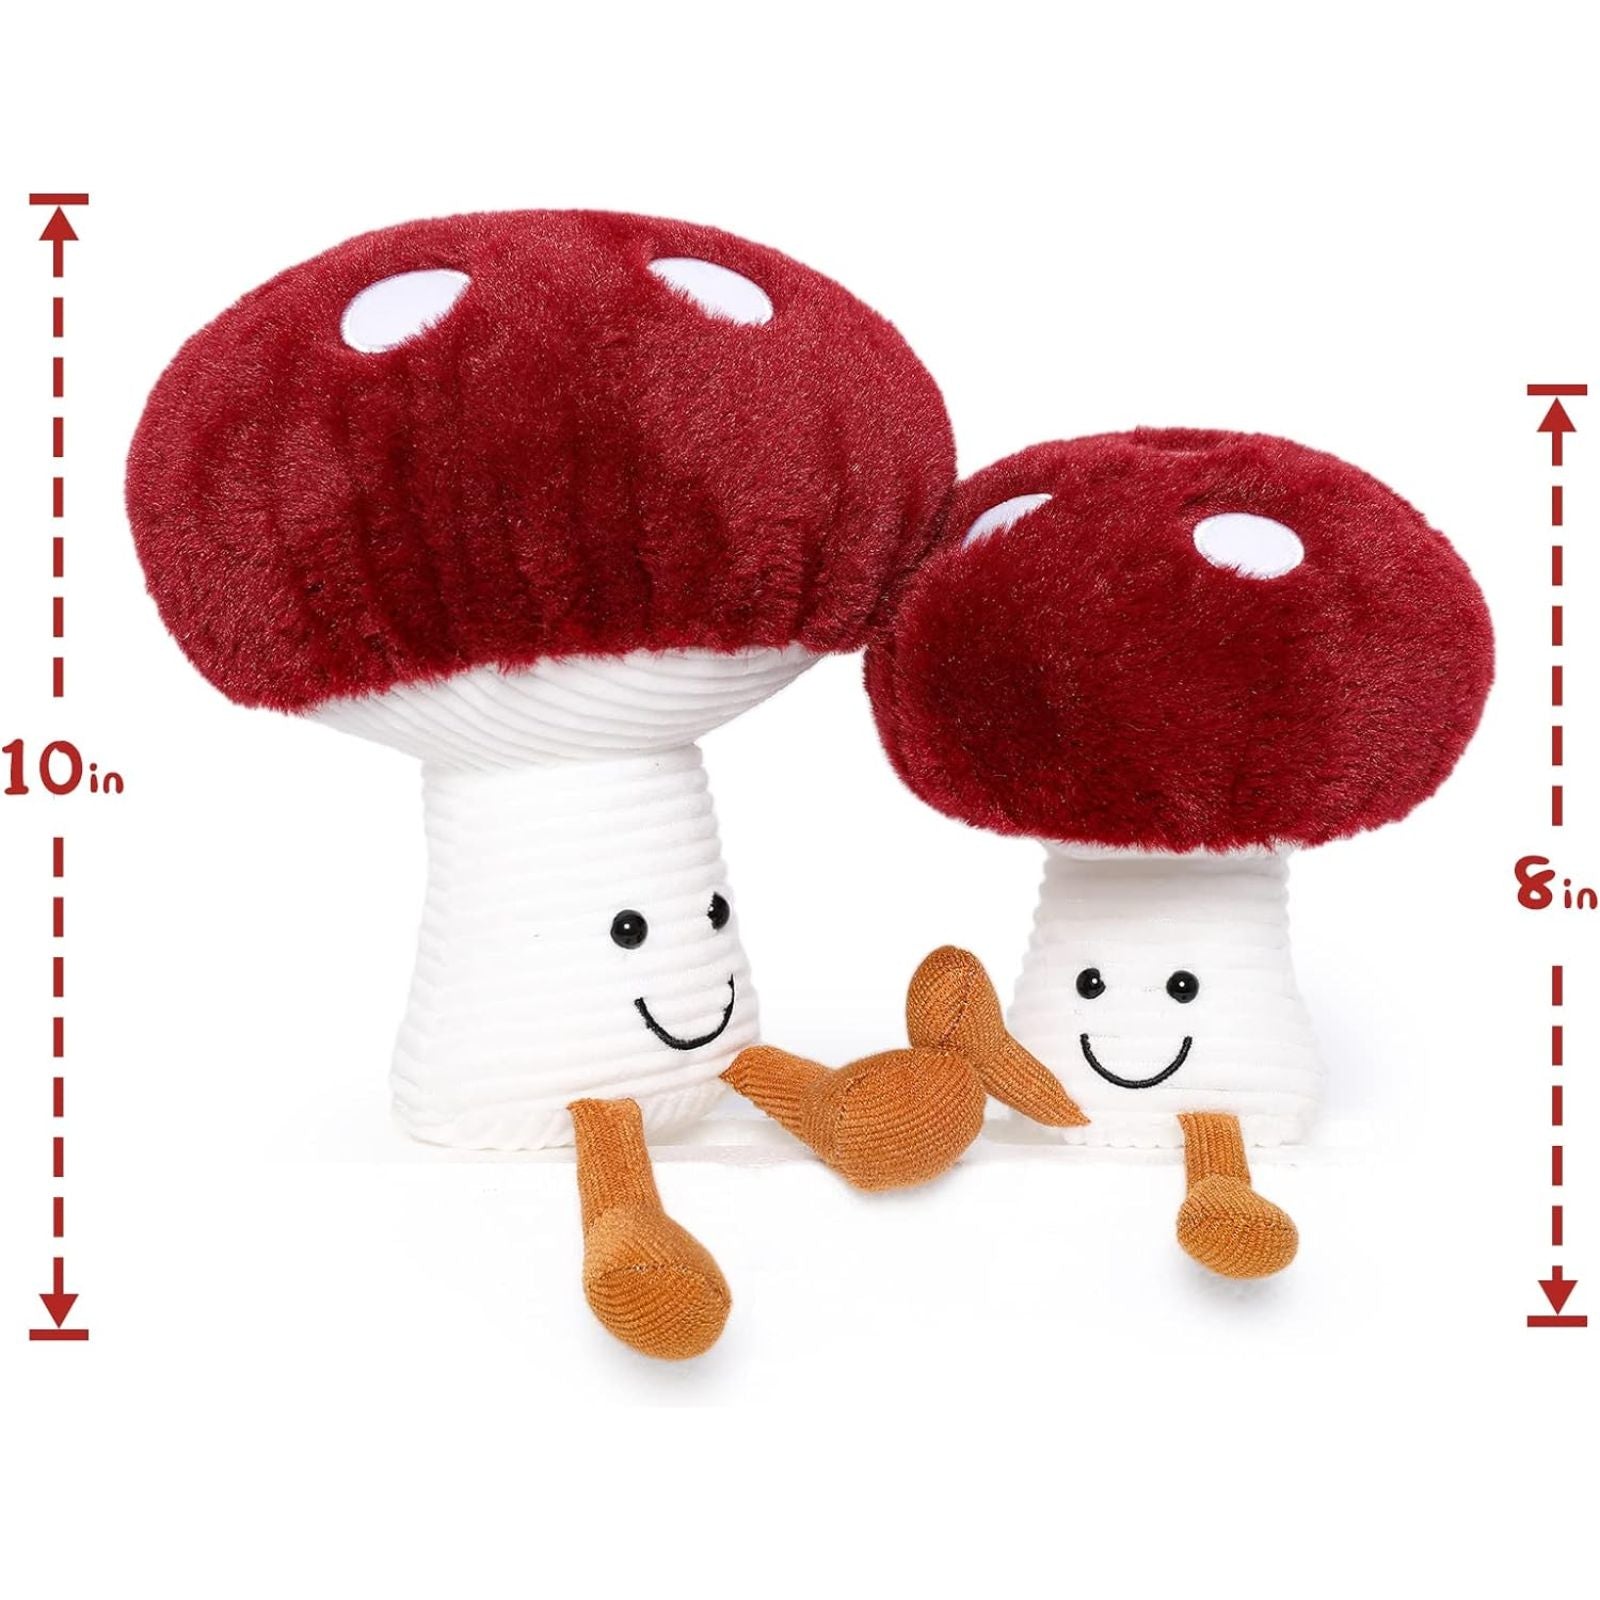 Mushroom Stuffed Toy, 8/10 Inches